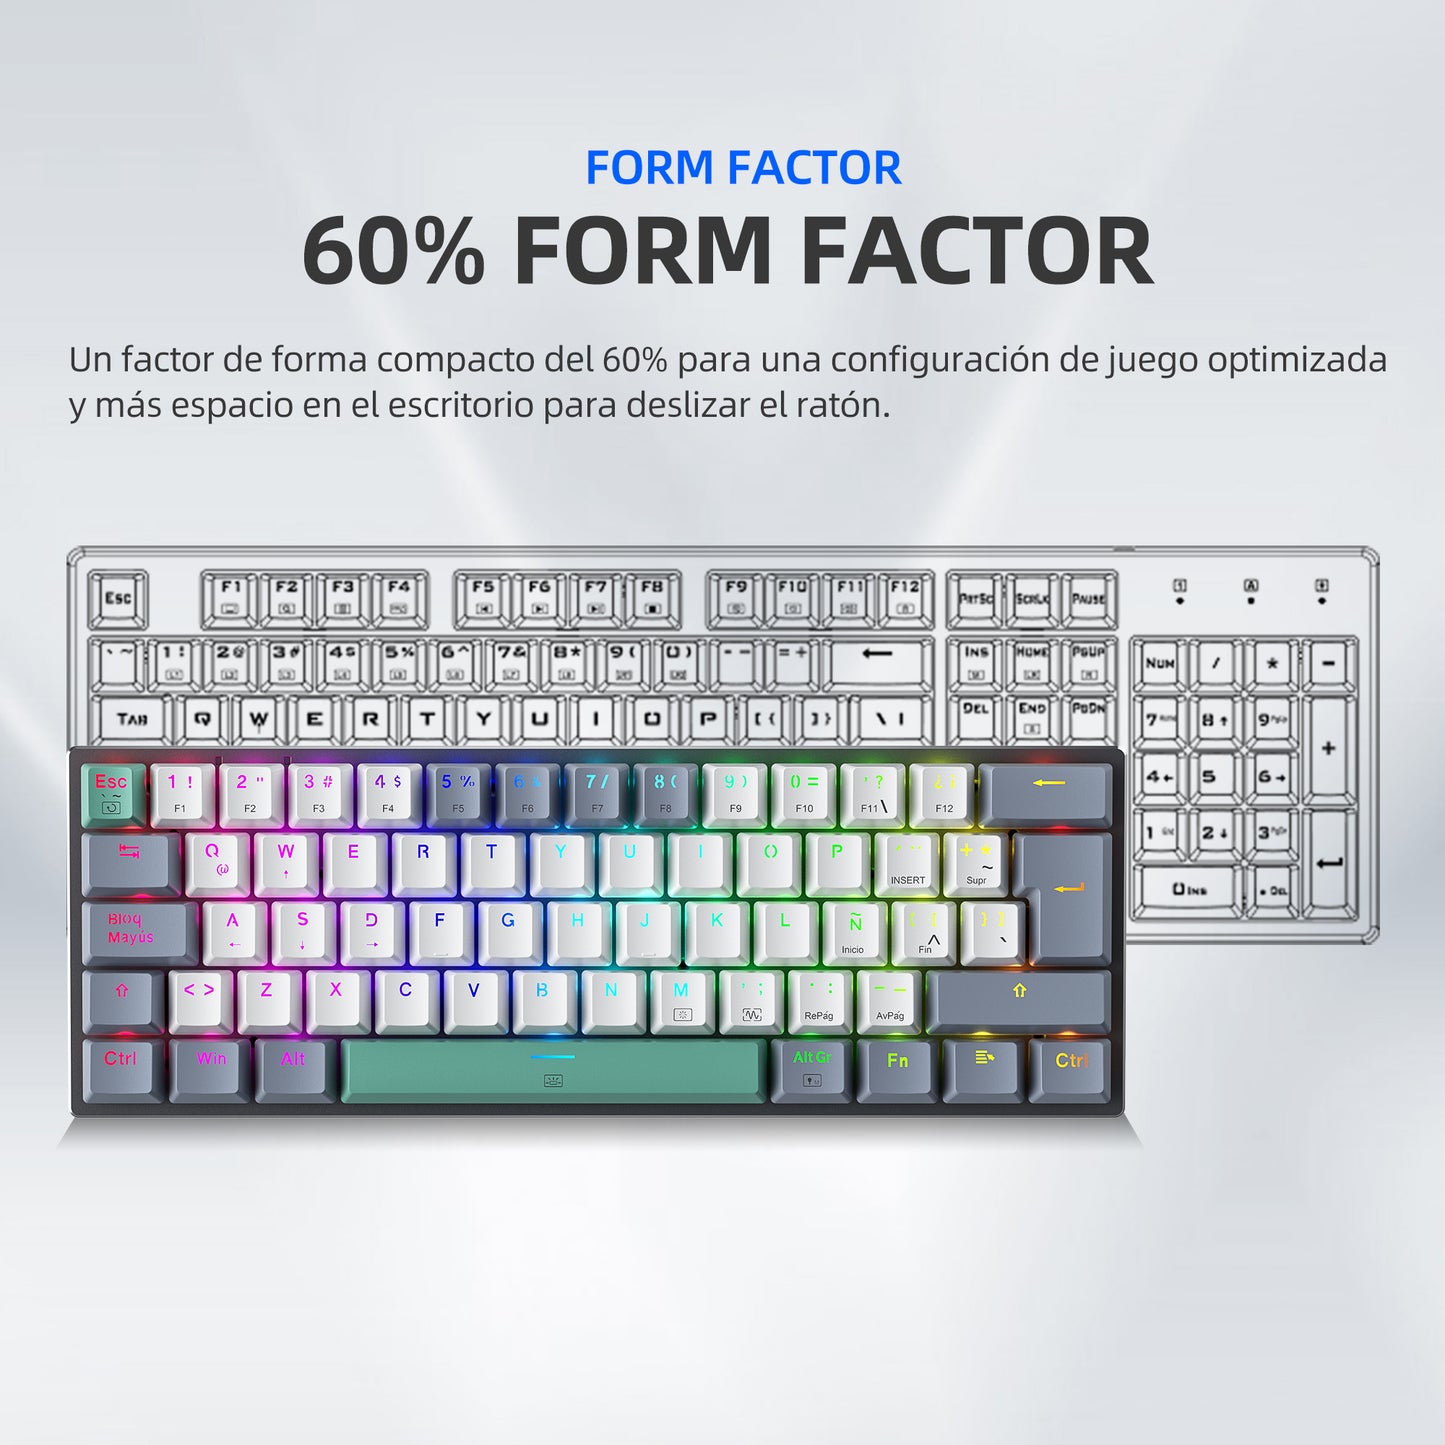 K500-B61 Wired Mechanical Keyboard - ISO Layout